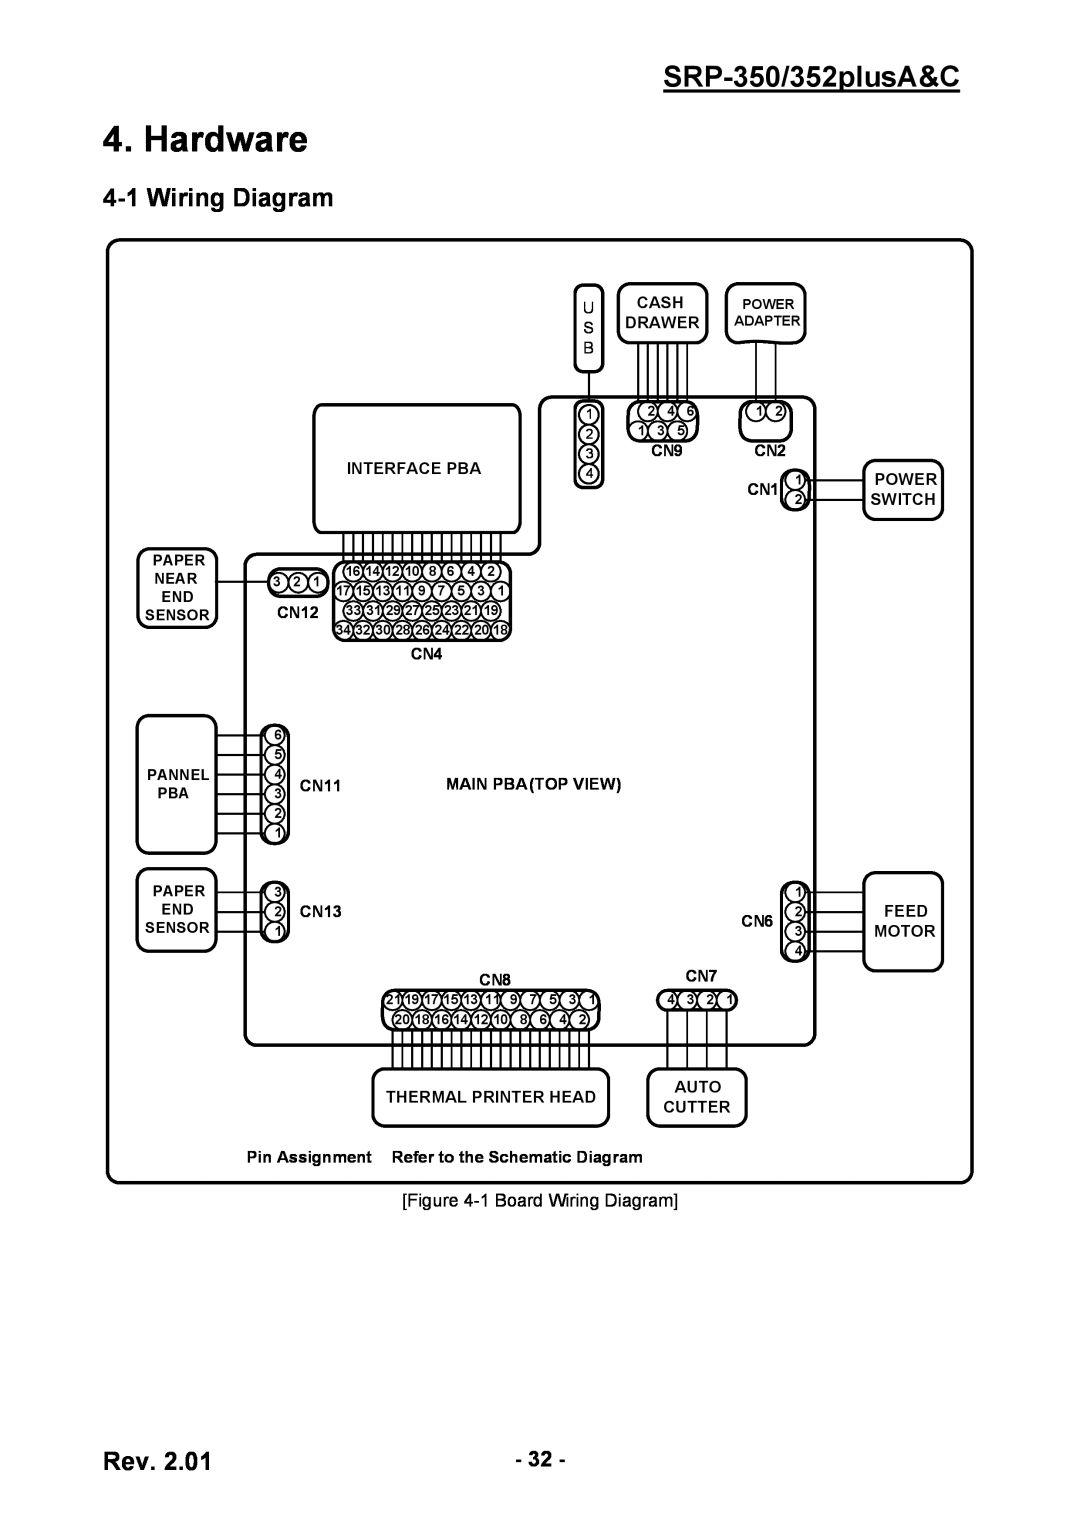 BIXOLON service manual Hardware, SRP-350/352plusA&C, 1 Board Wiring Diagram 